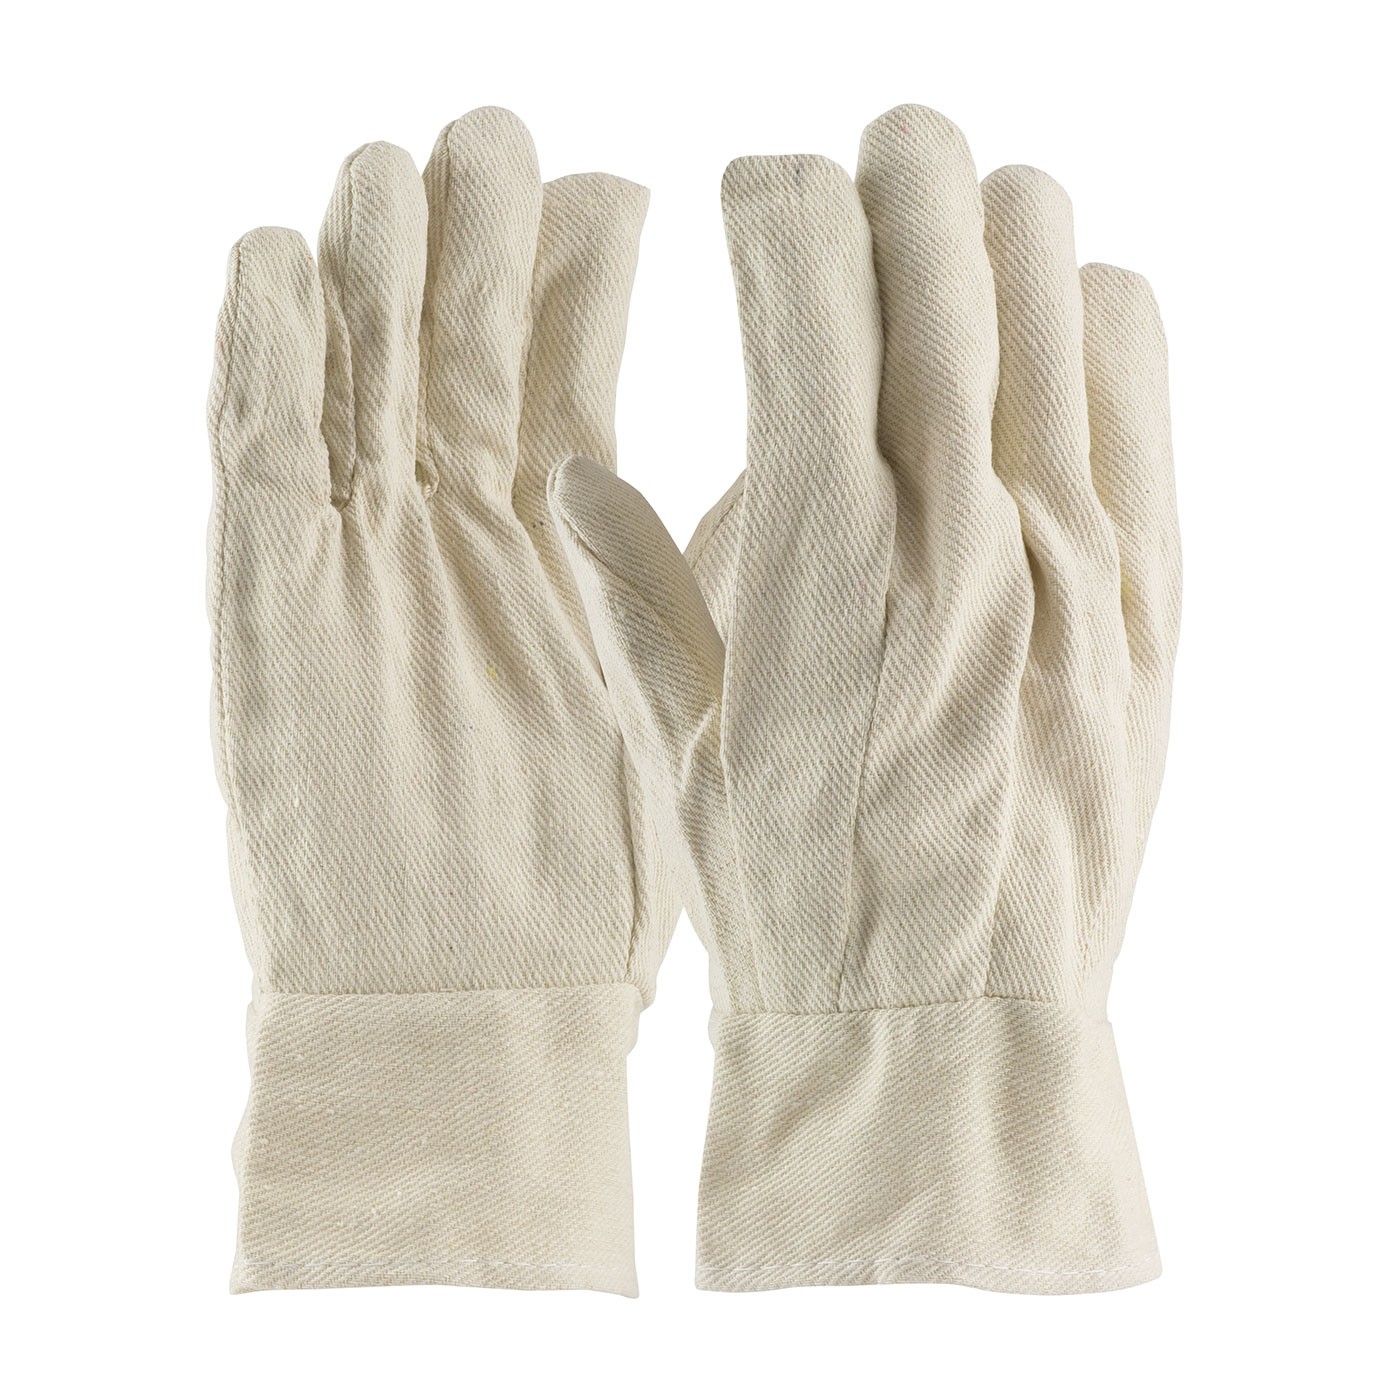 PIP® Premium Grade Cotton Canvas Single Palm Glove - Band Top  (#90-908BT)